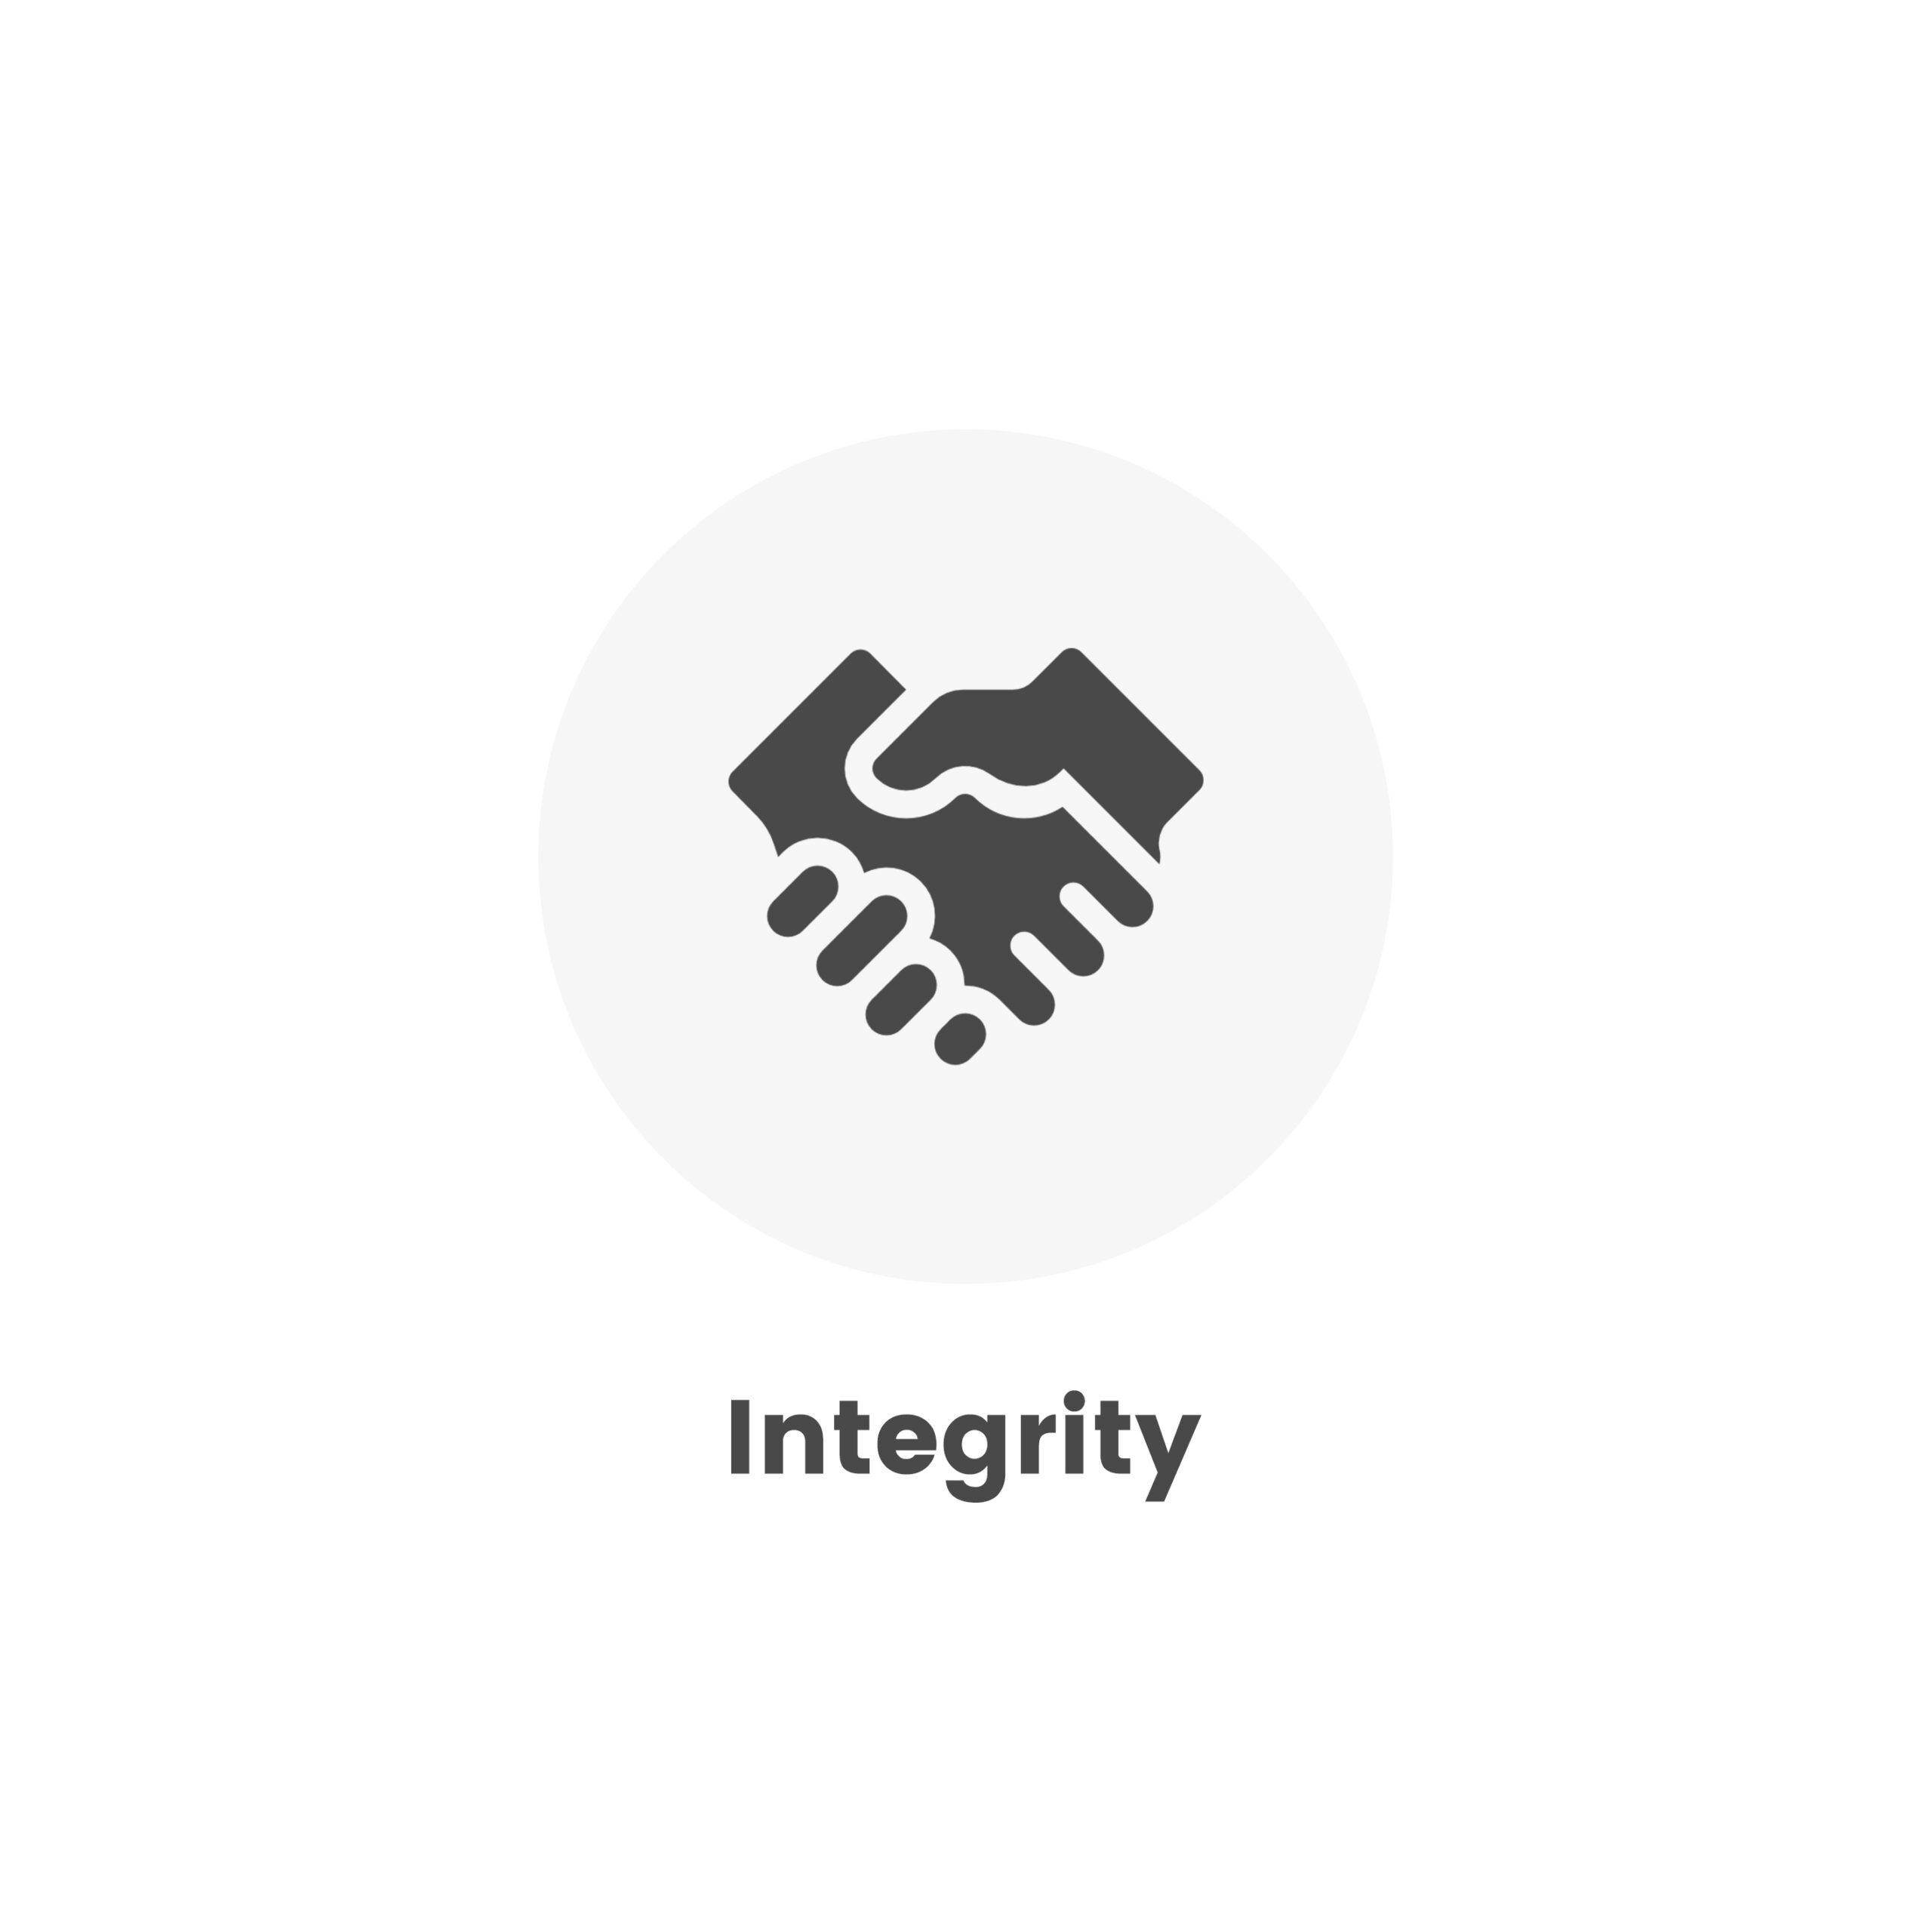 HighDecora 3 Integrity